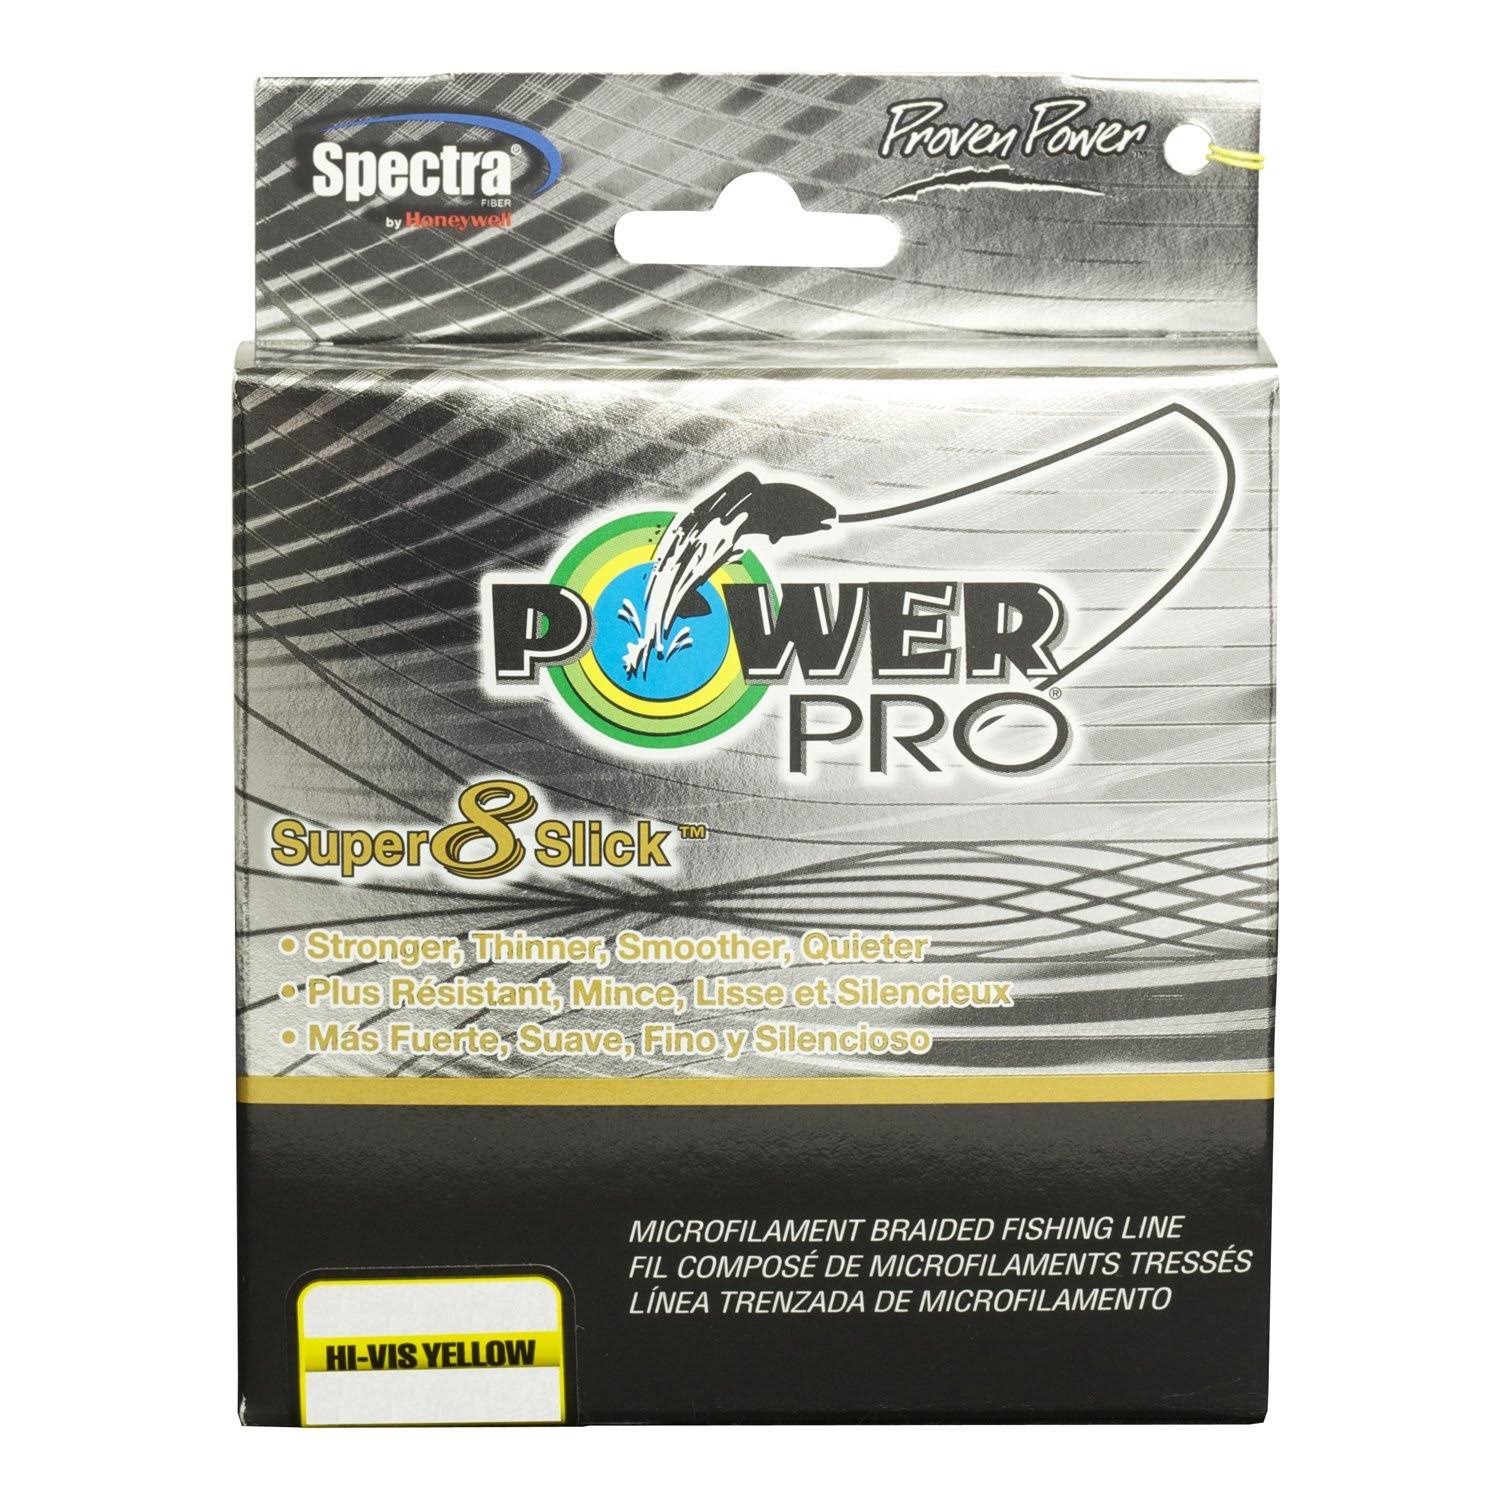 Power Pro Super 8 Slick Spectra Line - Yellow, 80lbs, 300yds